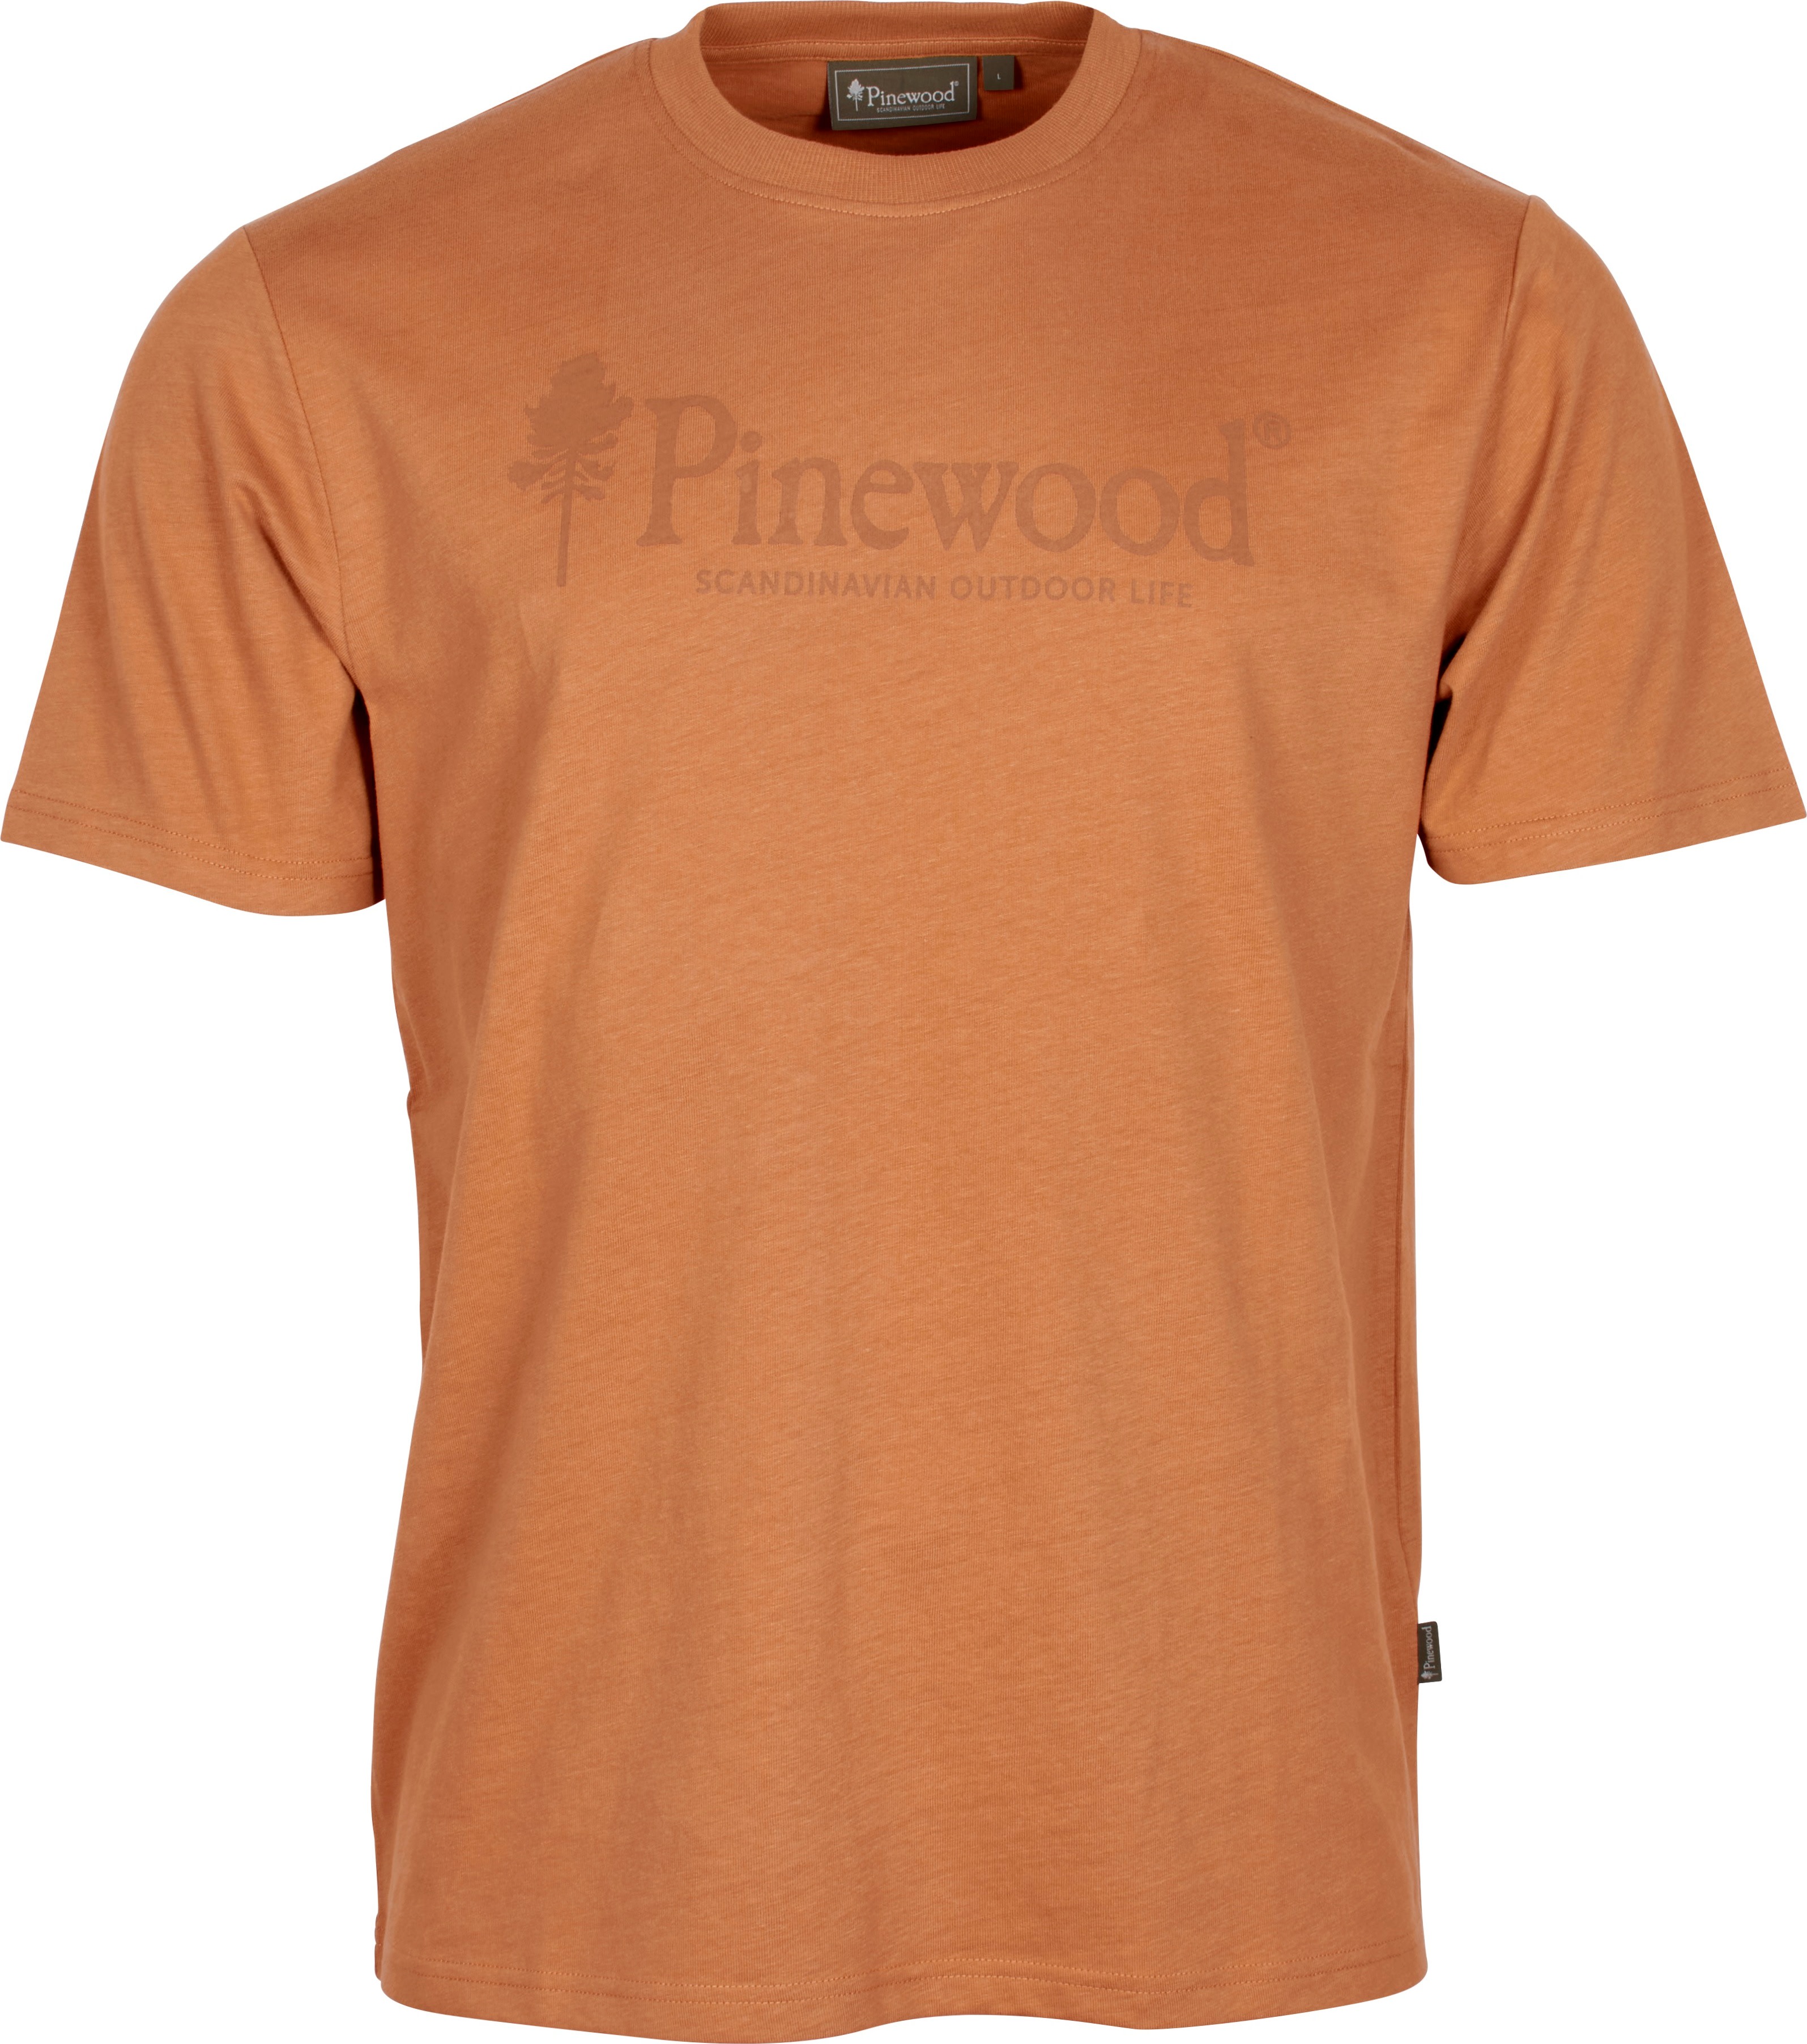 Pinewood Men’s Outdoor Life T-shirt L.Terracotta